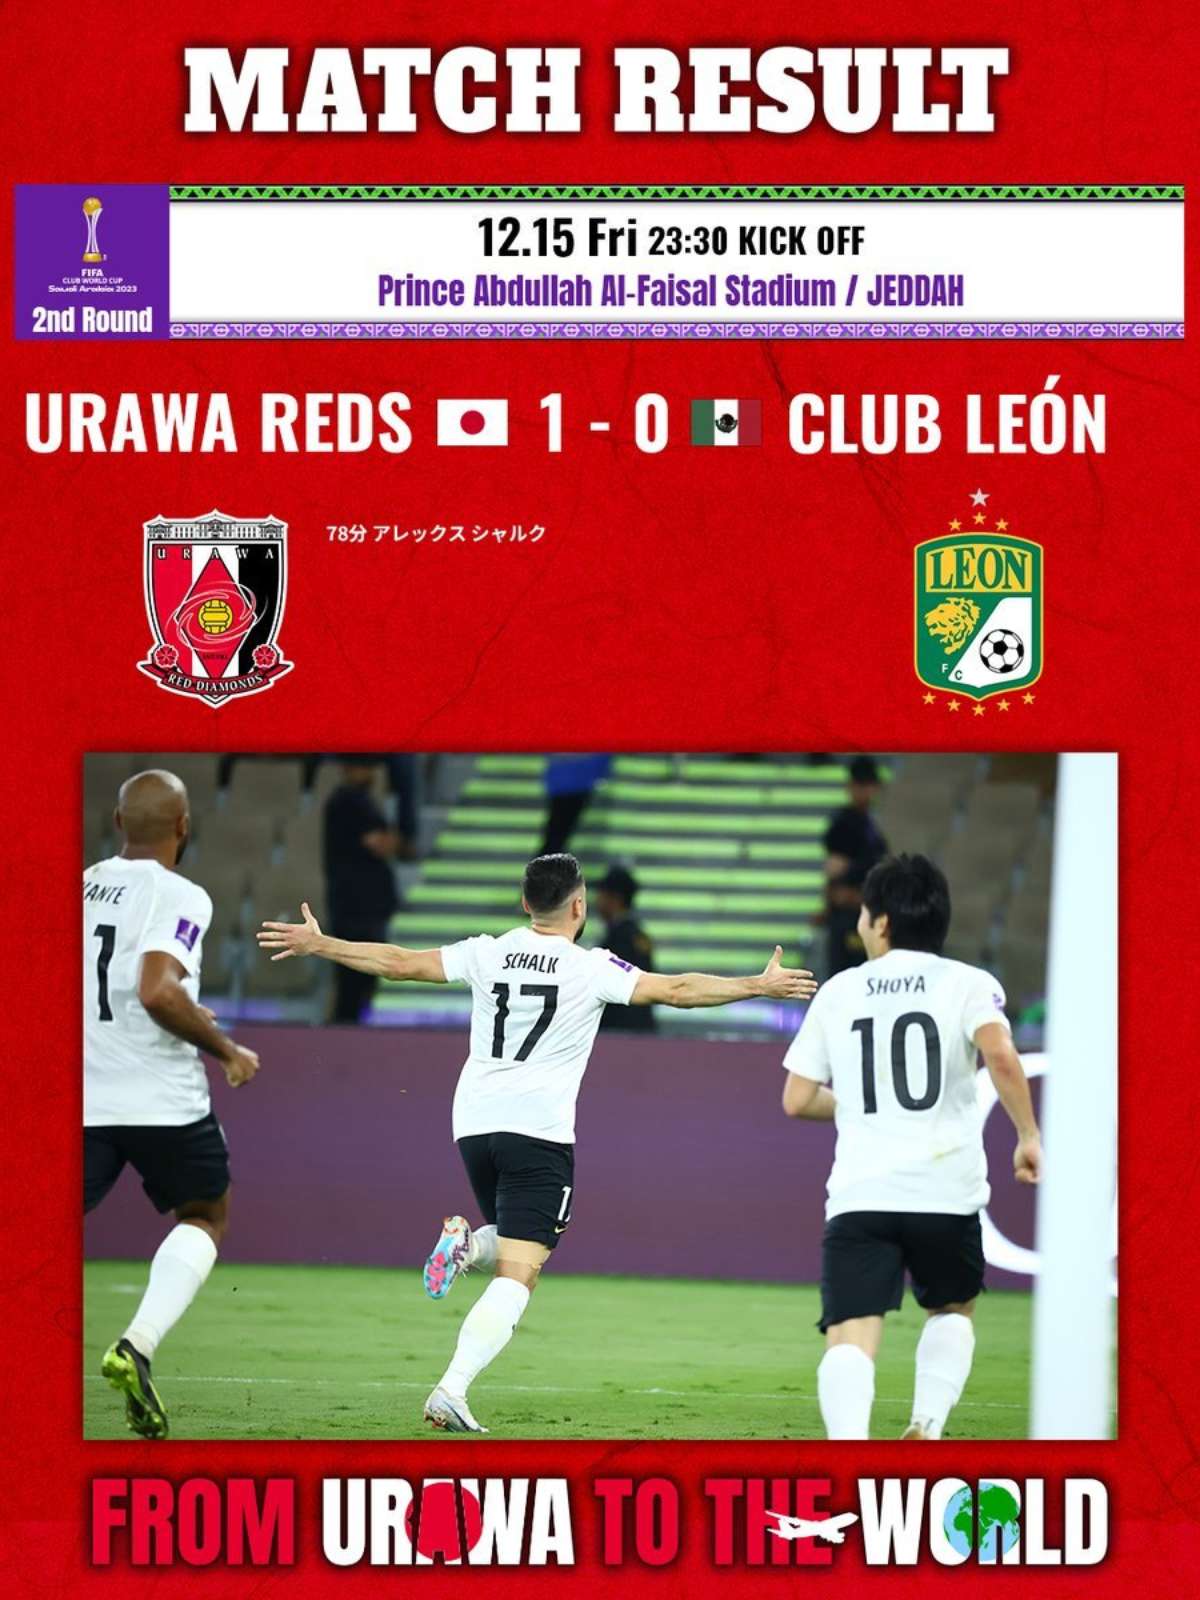 Club León v Urawa Red Diamonds, Second Round